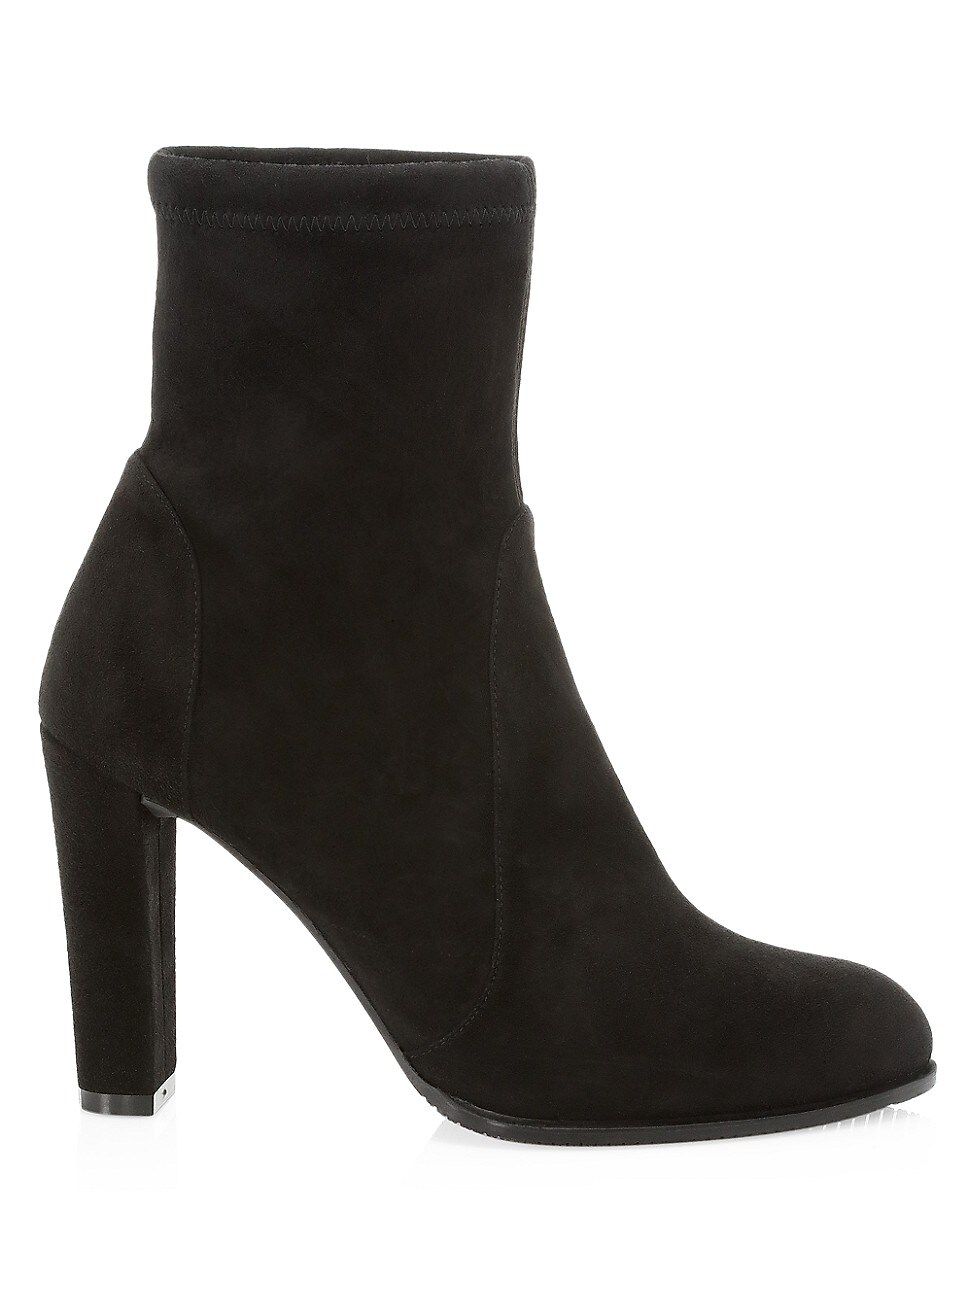 Stuart Weitzman Women's Highland Suede Sock Boots - Black - Size 8 | Saks Fifth Avenue